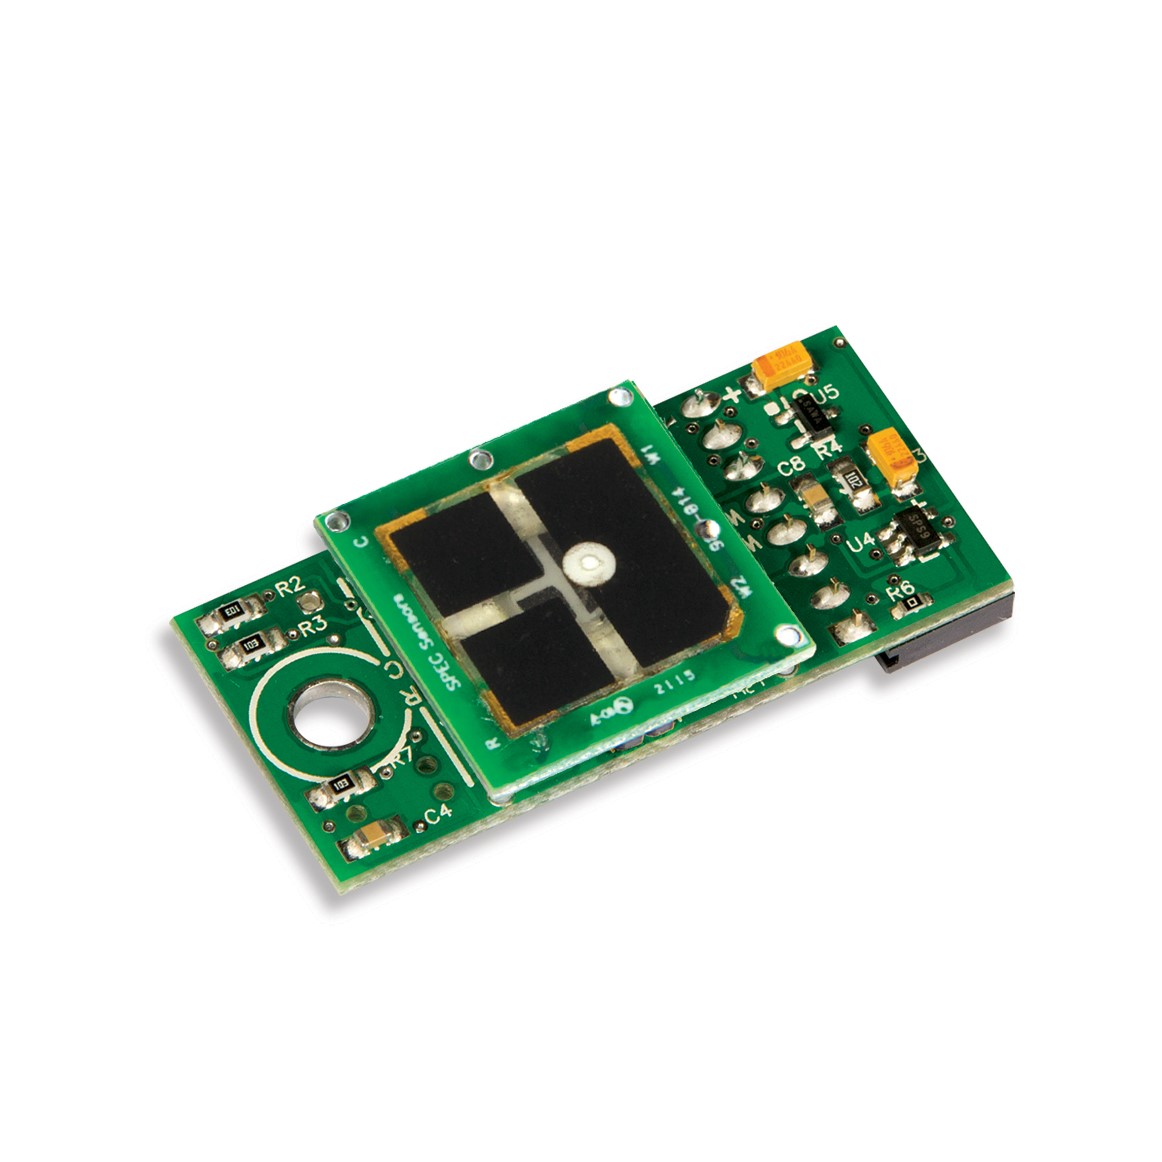 Digital Gas Sensor for IoT